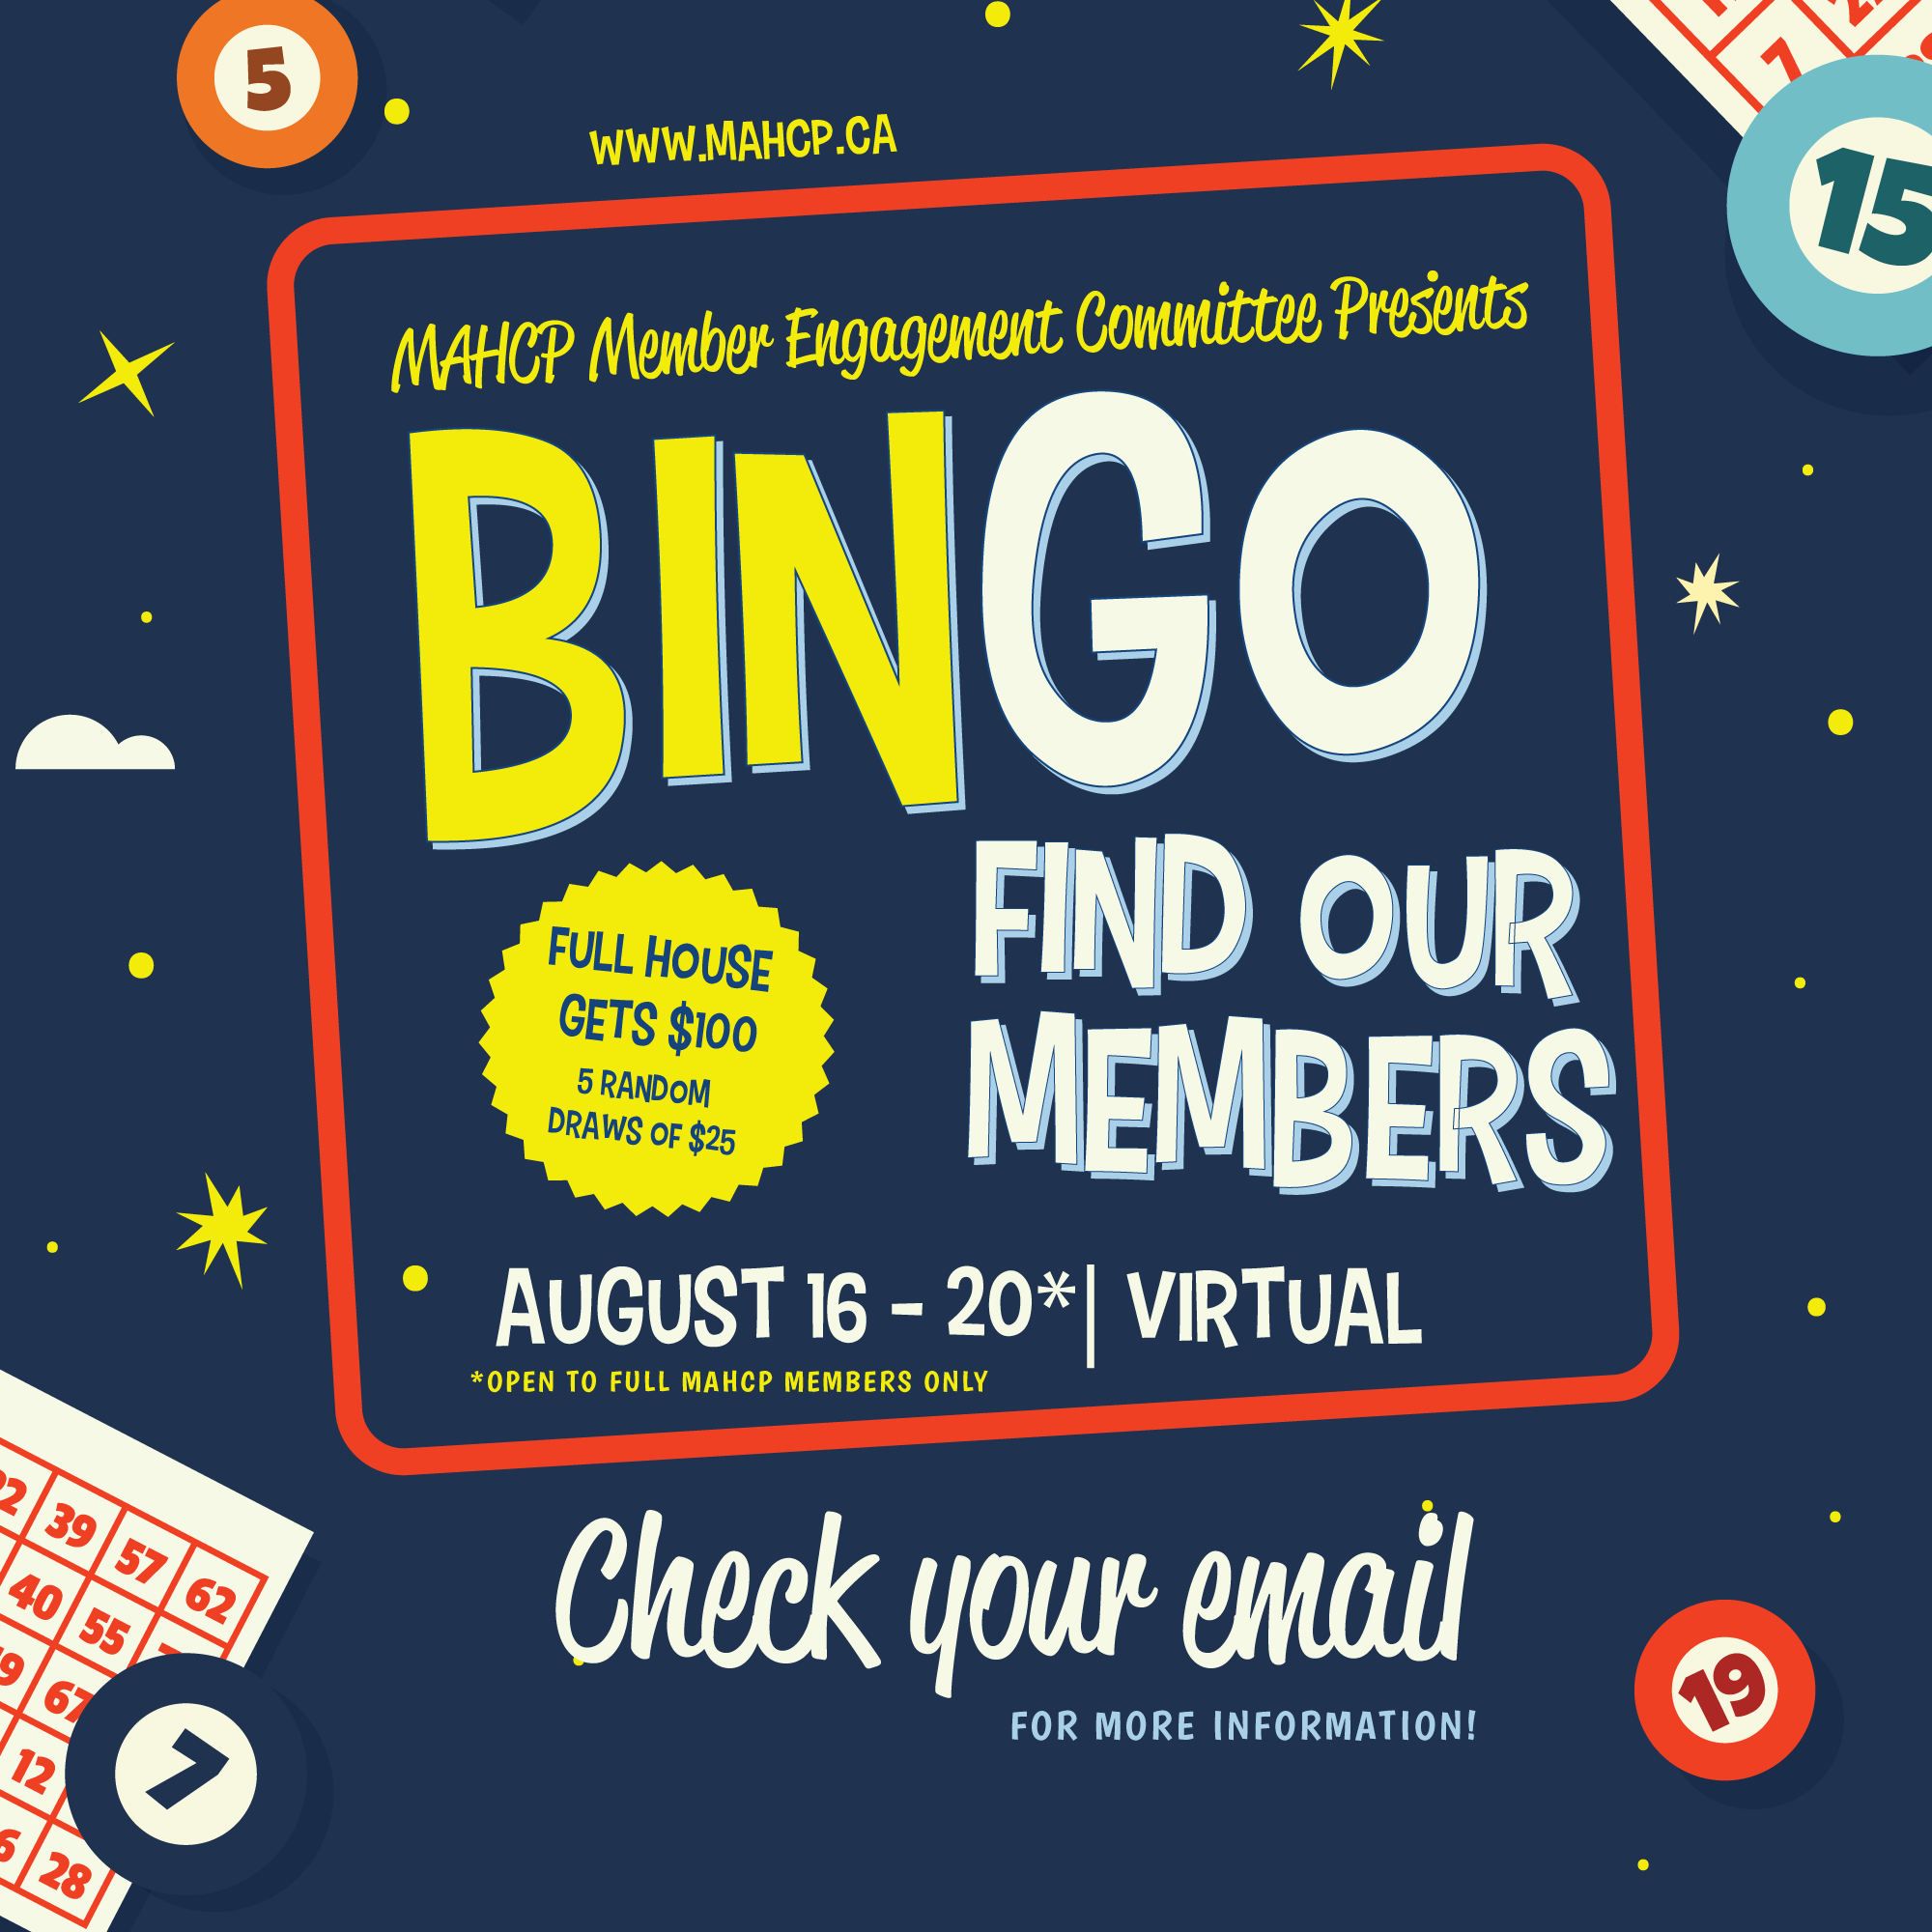 MAHCP Bingo starts Monday, August 16th!